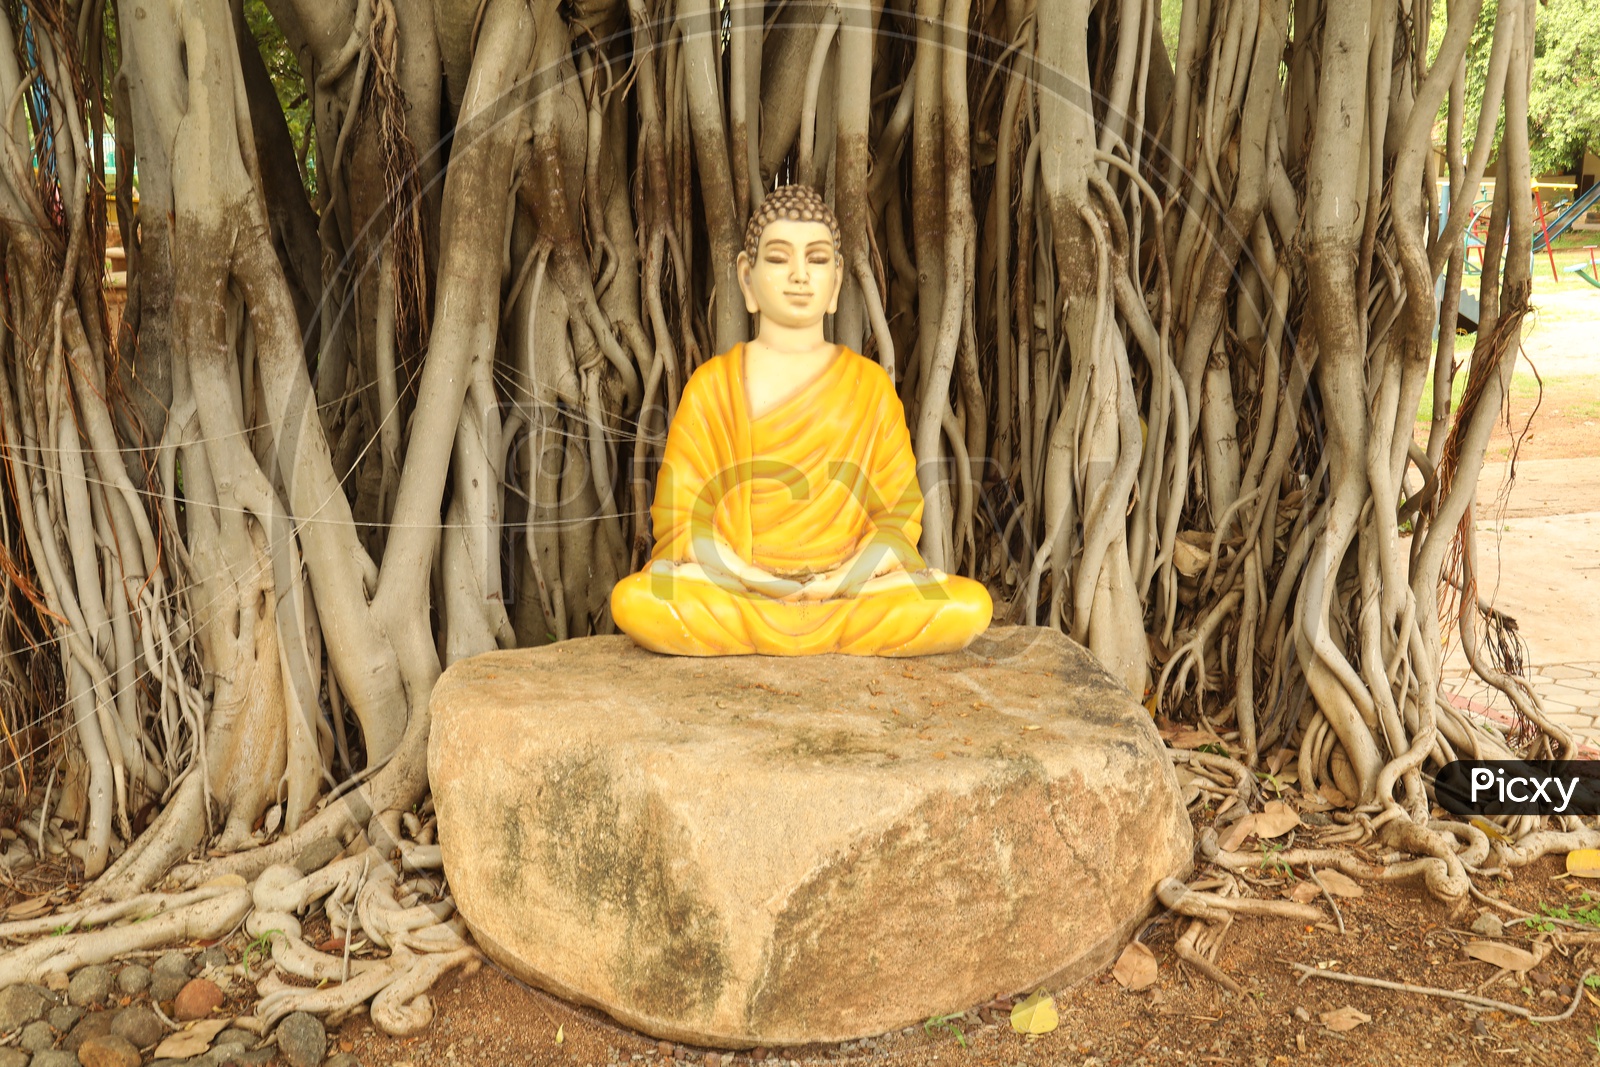 Gautham Buddha Statue In Meditation Pose Under banyan Tree